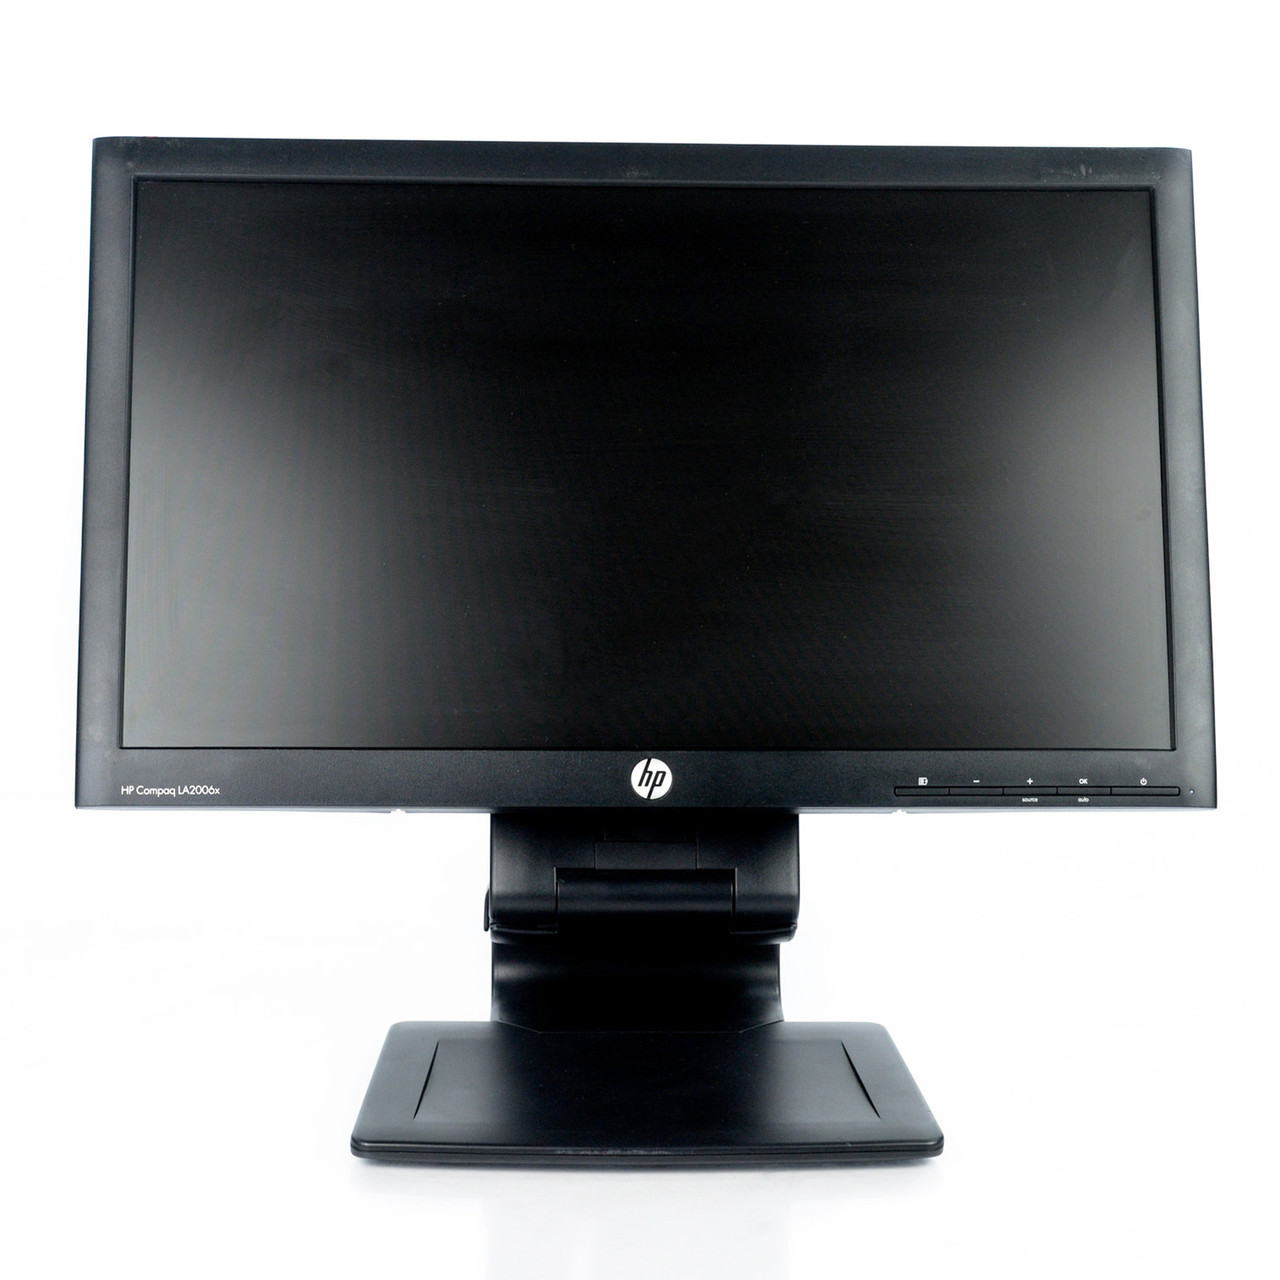 HP COMPAQ LA2006x 20" LED/LCD Monitor widescreen 16:9 1600x900 Grado B 